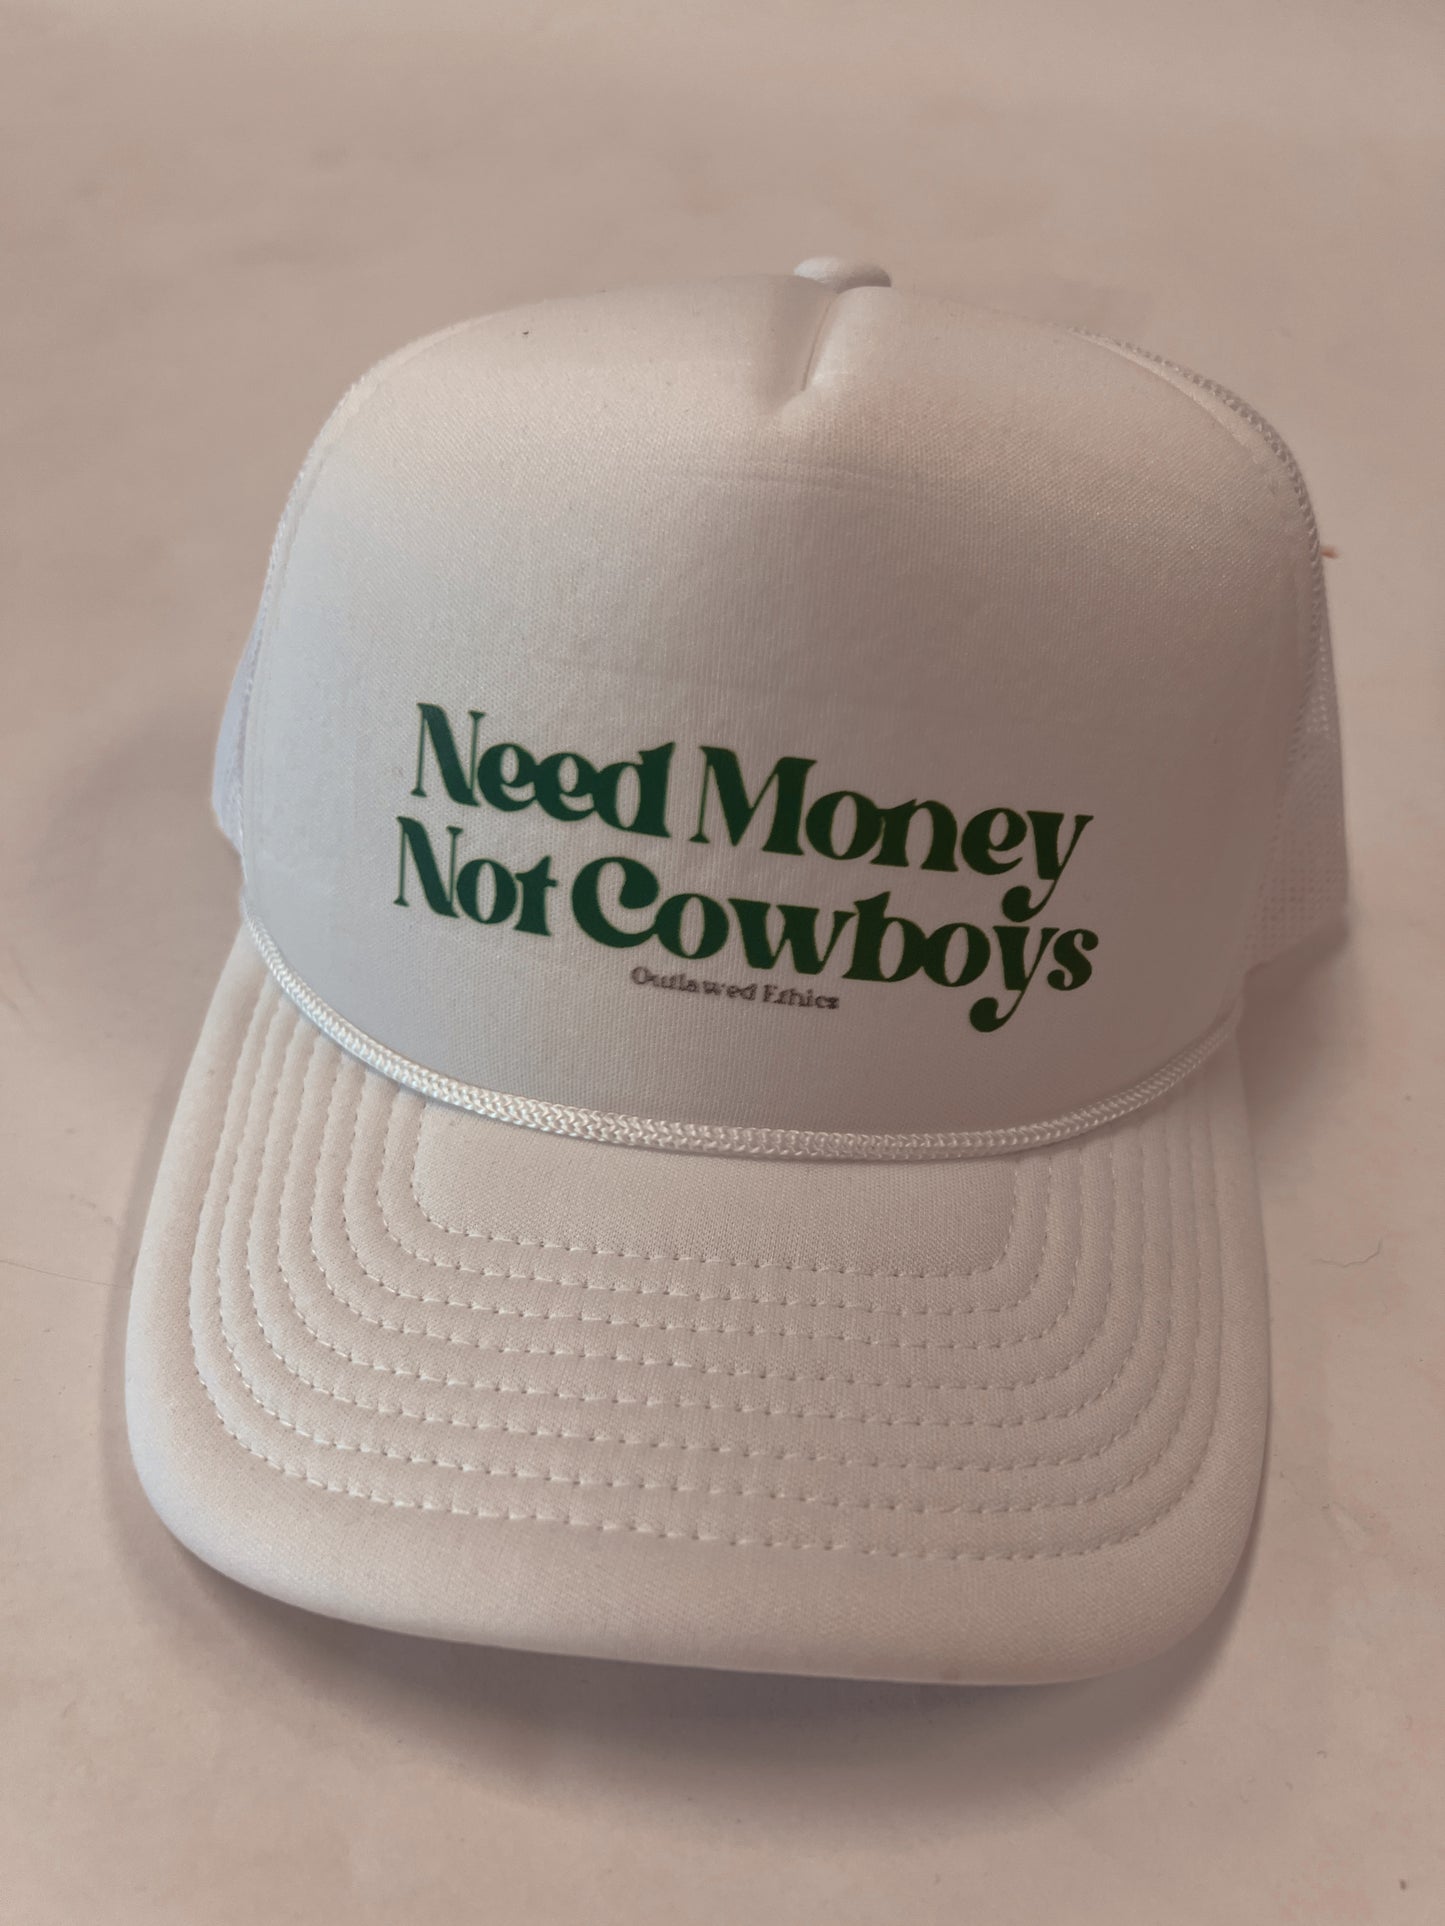 Need Money Not Cowboys Rope Trucker Hat